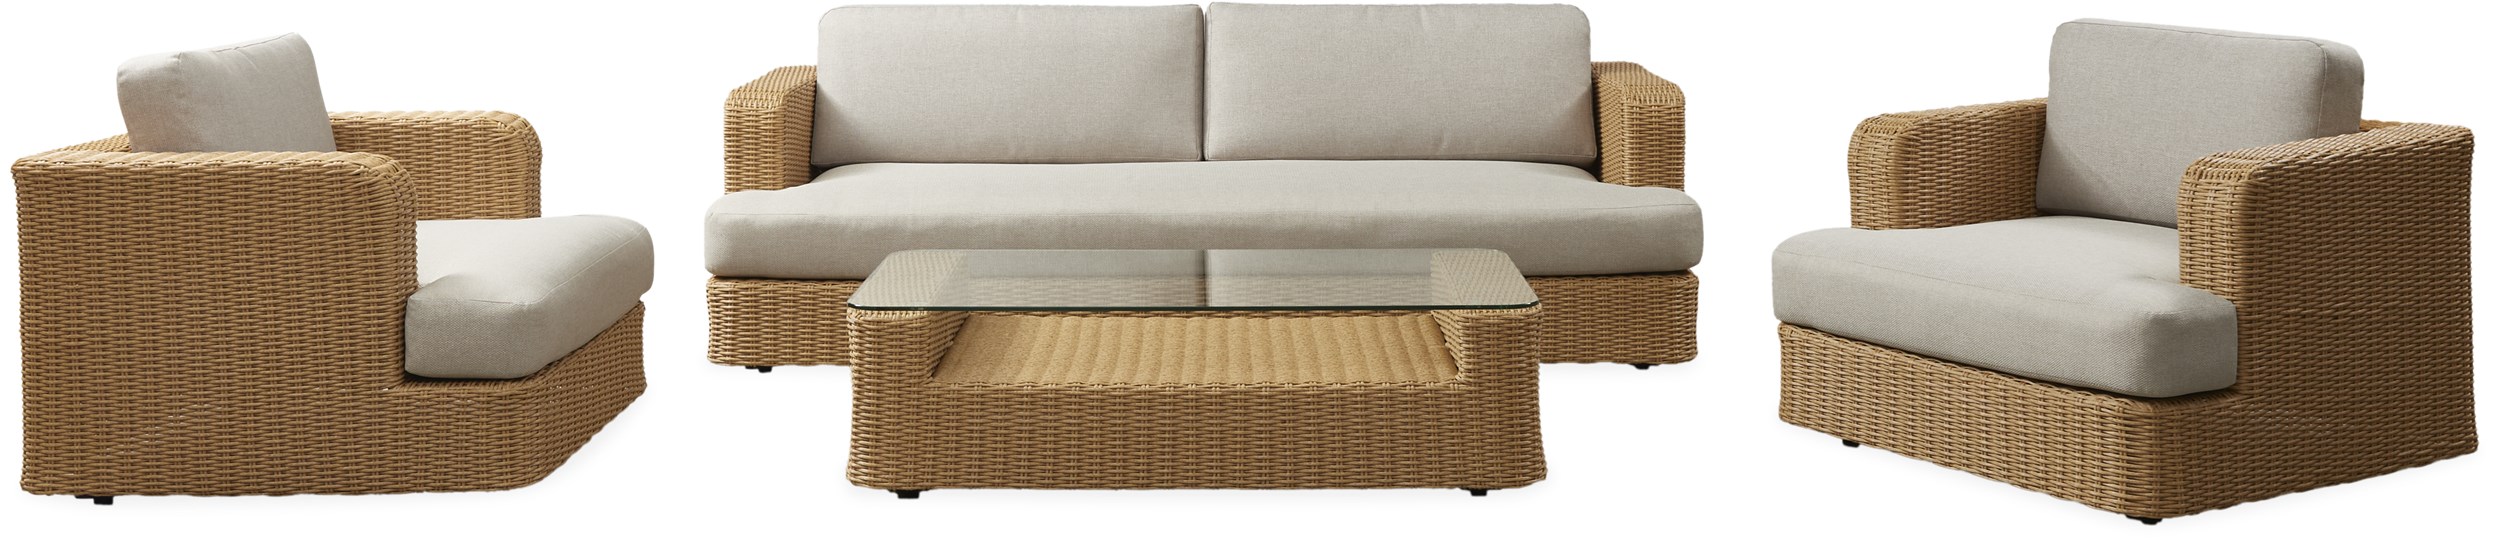 Luan Loungehavesæt med 3 pers. loungesofa, 2 stk. hvilestole og loungebord.